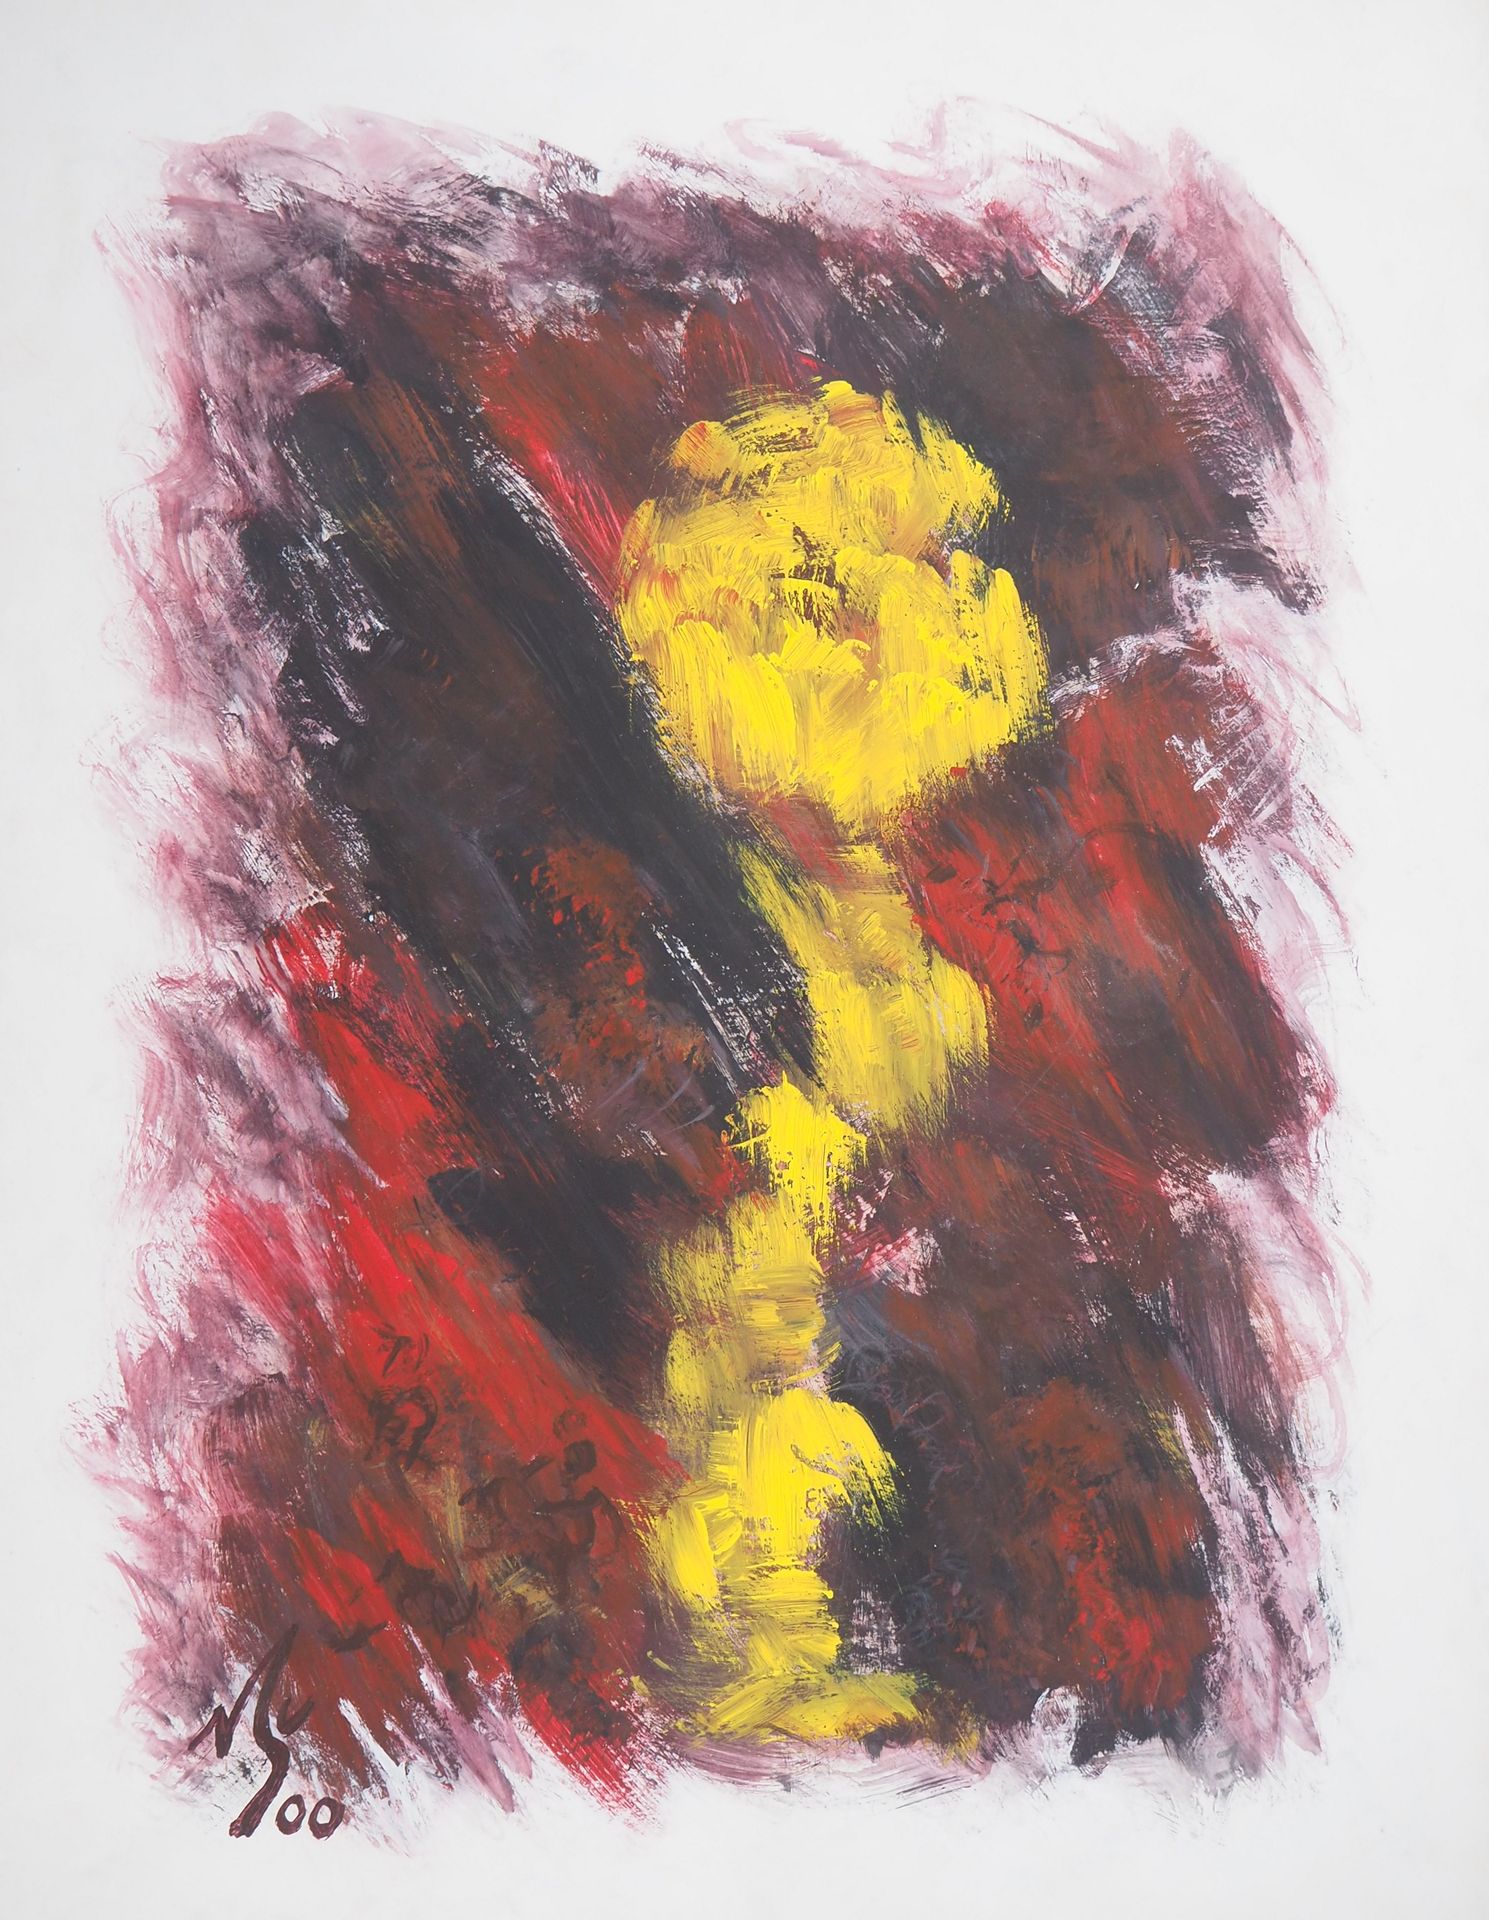 Michel GUIGNARD Michel Guignard

Flor amarilla en un paisaje leonado, 2000

Orig&hellip;